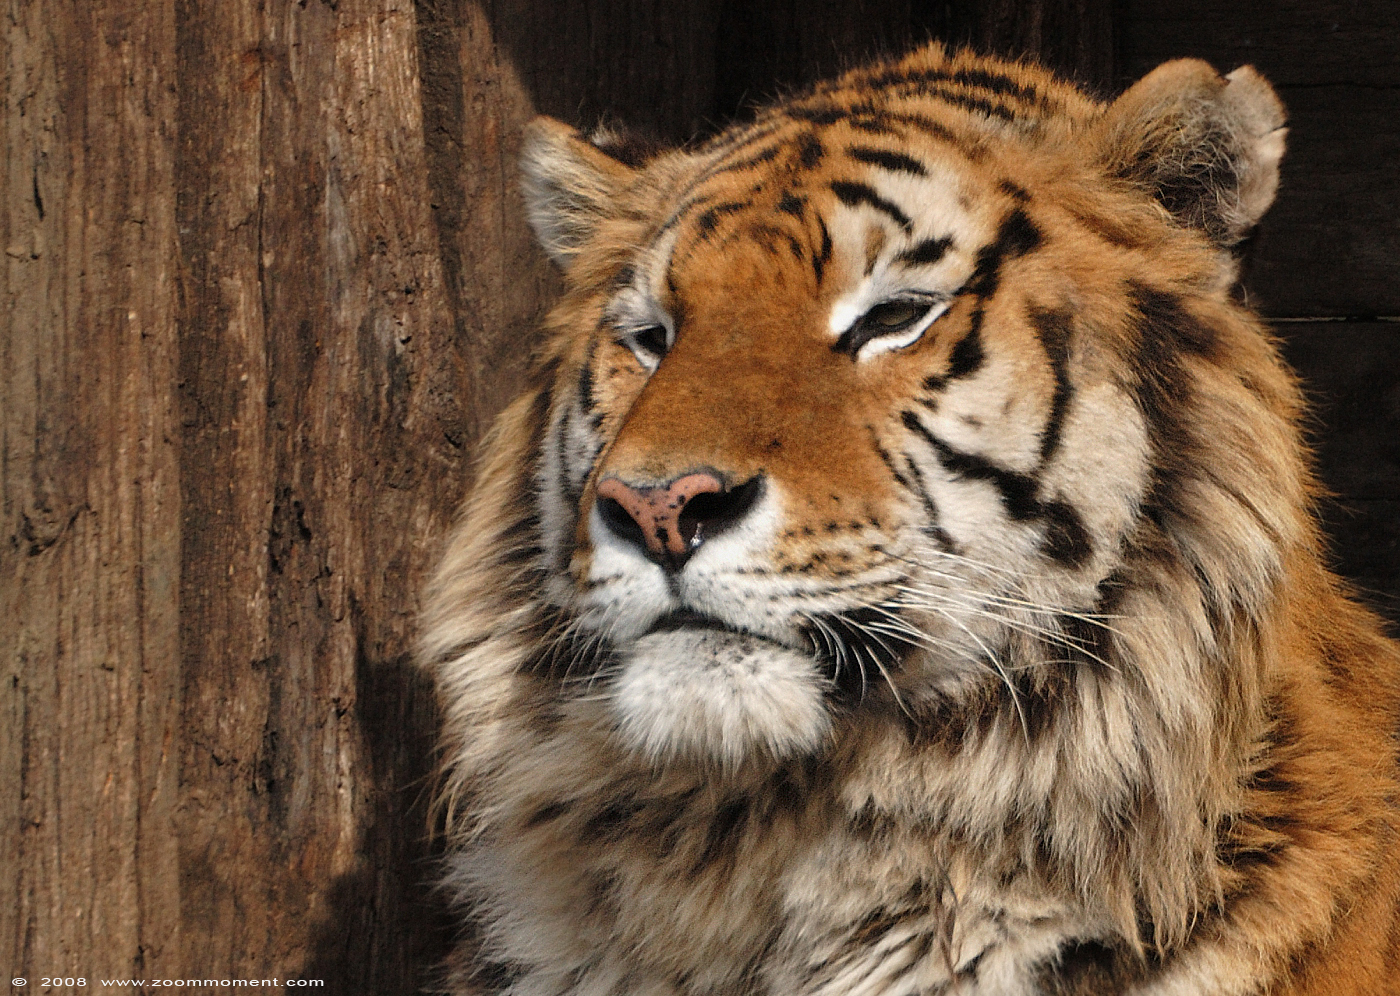 Siberische tijger ( Panthera tigris altaica ) Siberian tiger
Keywords: Olmen zoo Belgie Belgium Siberische tijger Panthera tigris altaica Siberian tiger